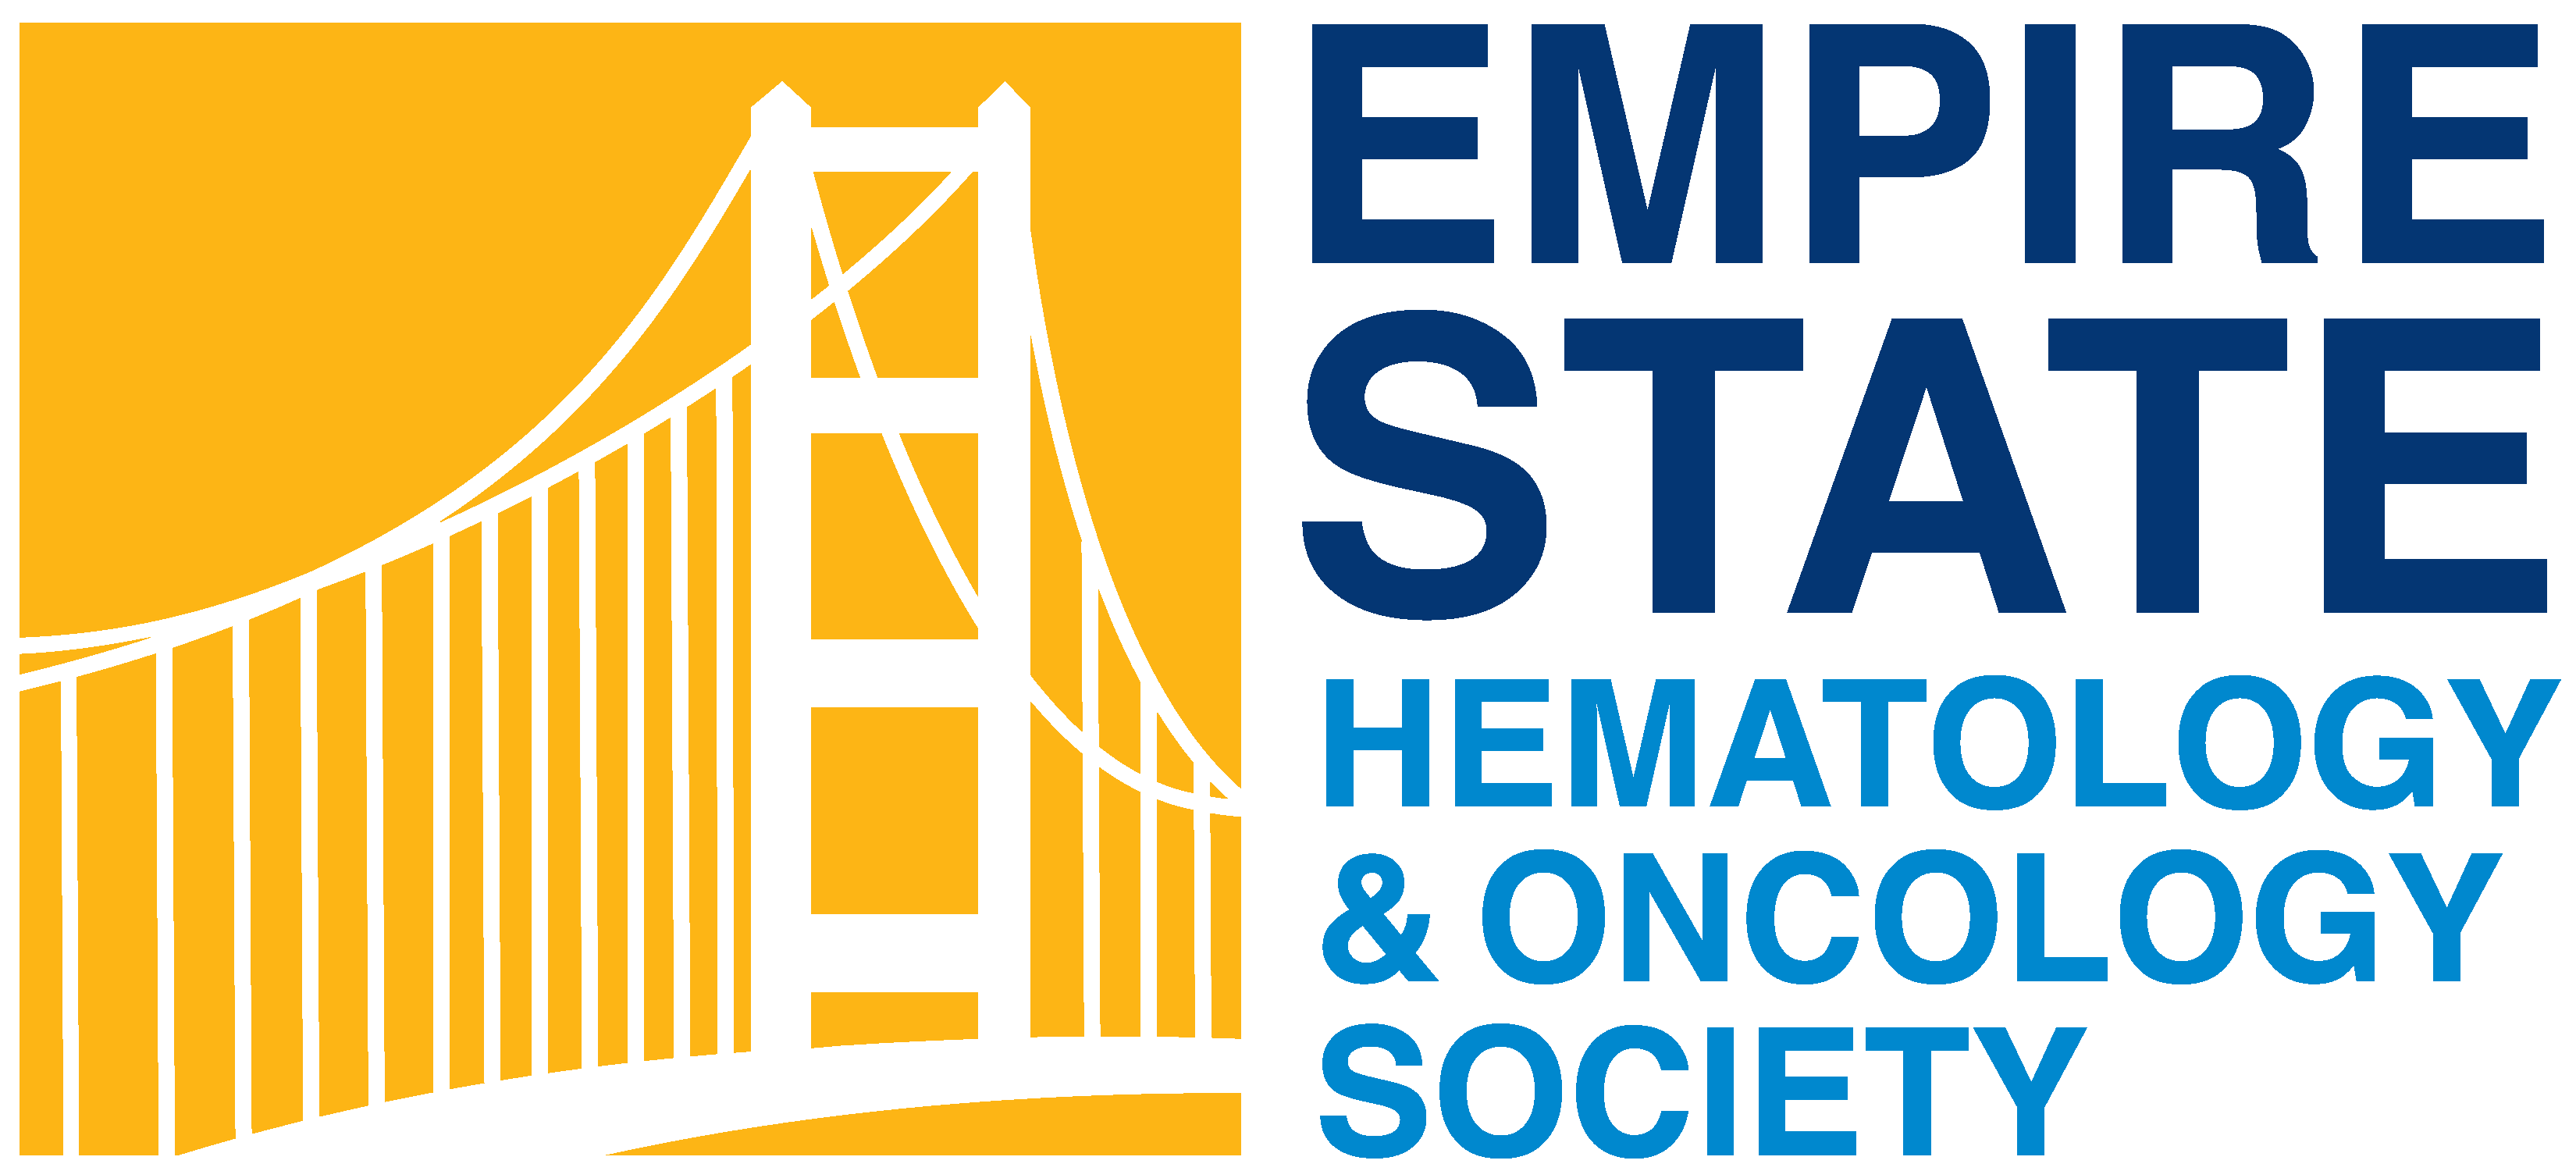 Empire State Hematology & Oncology Society